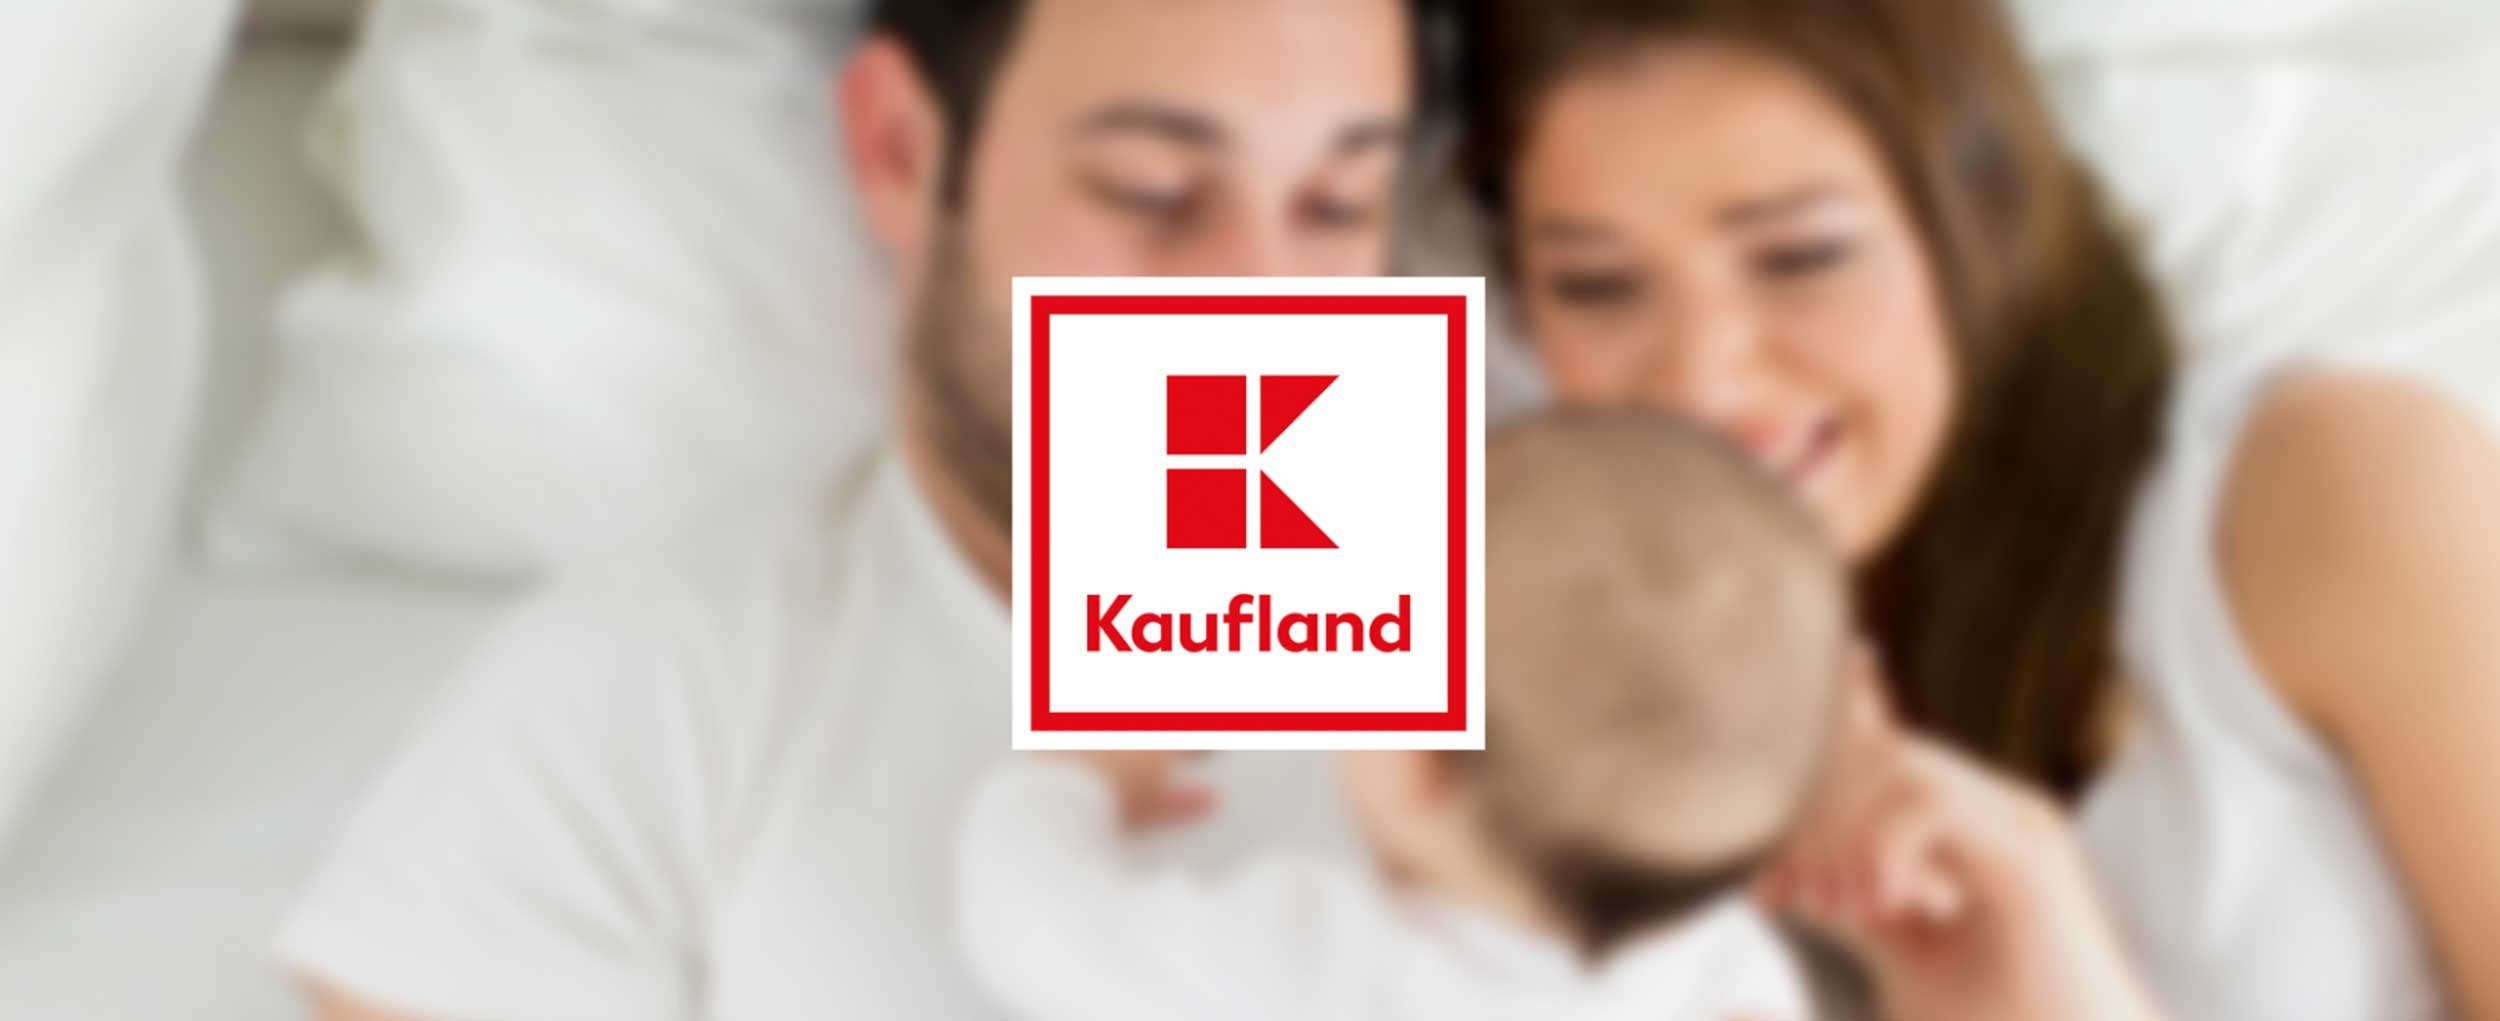 Familienmomente - Kaufland | Community Management